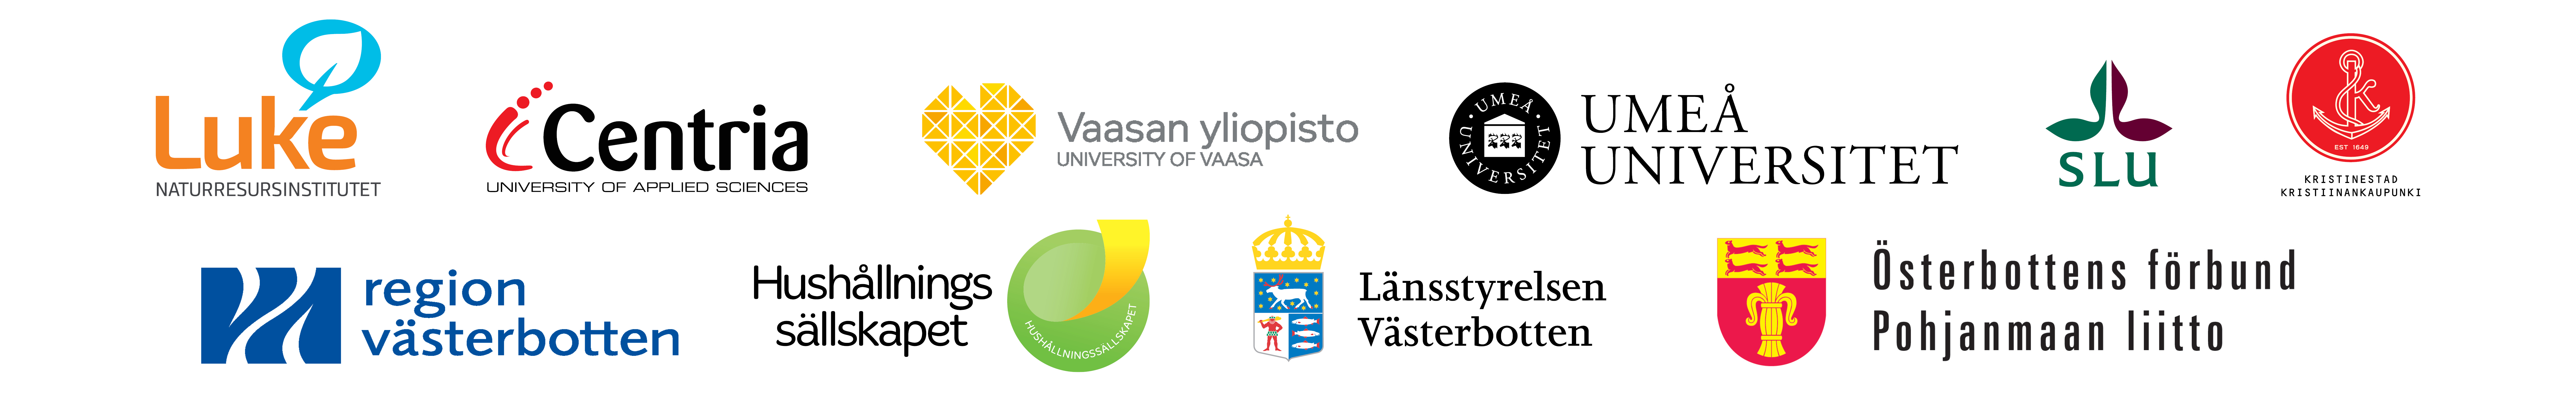 Logotypes projekt partners